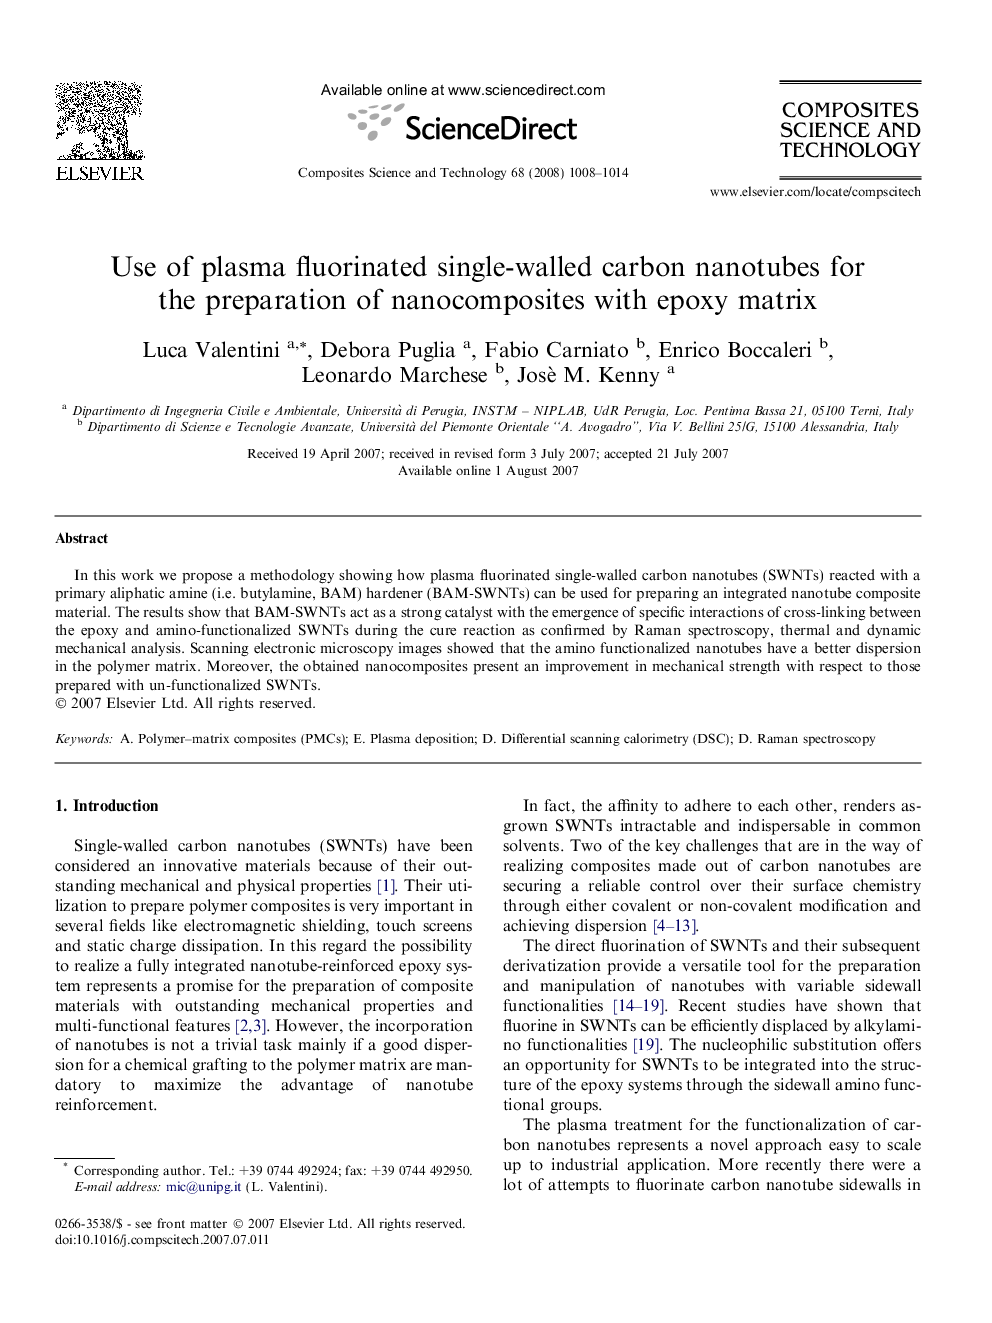 Use of plasma fluorinated single-walled carbon nanotubes for the preparation of nanocomposites with epoxy matrix